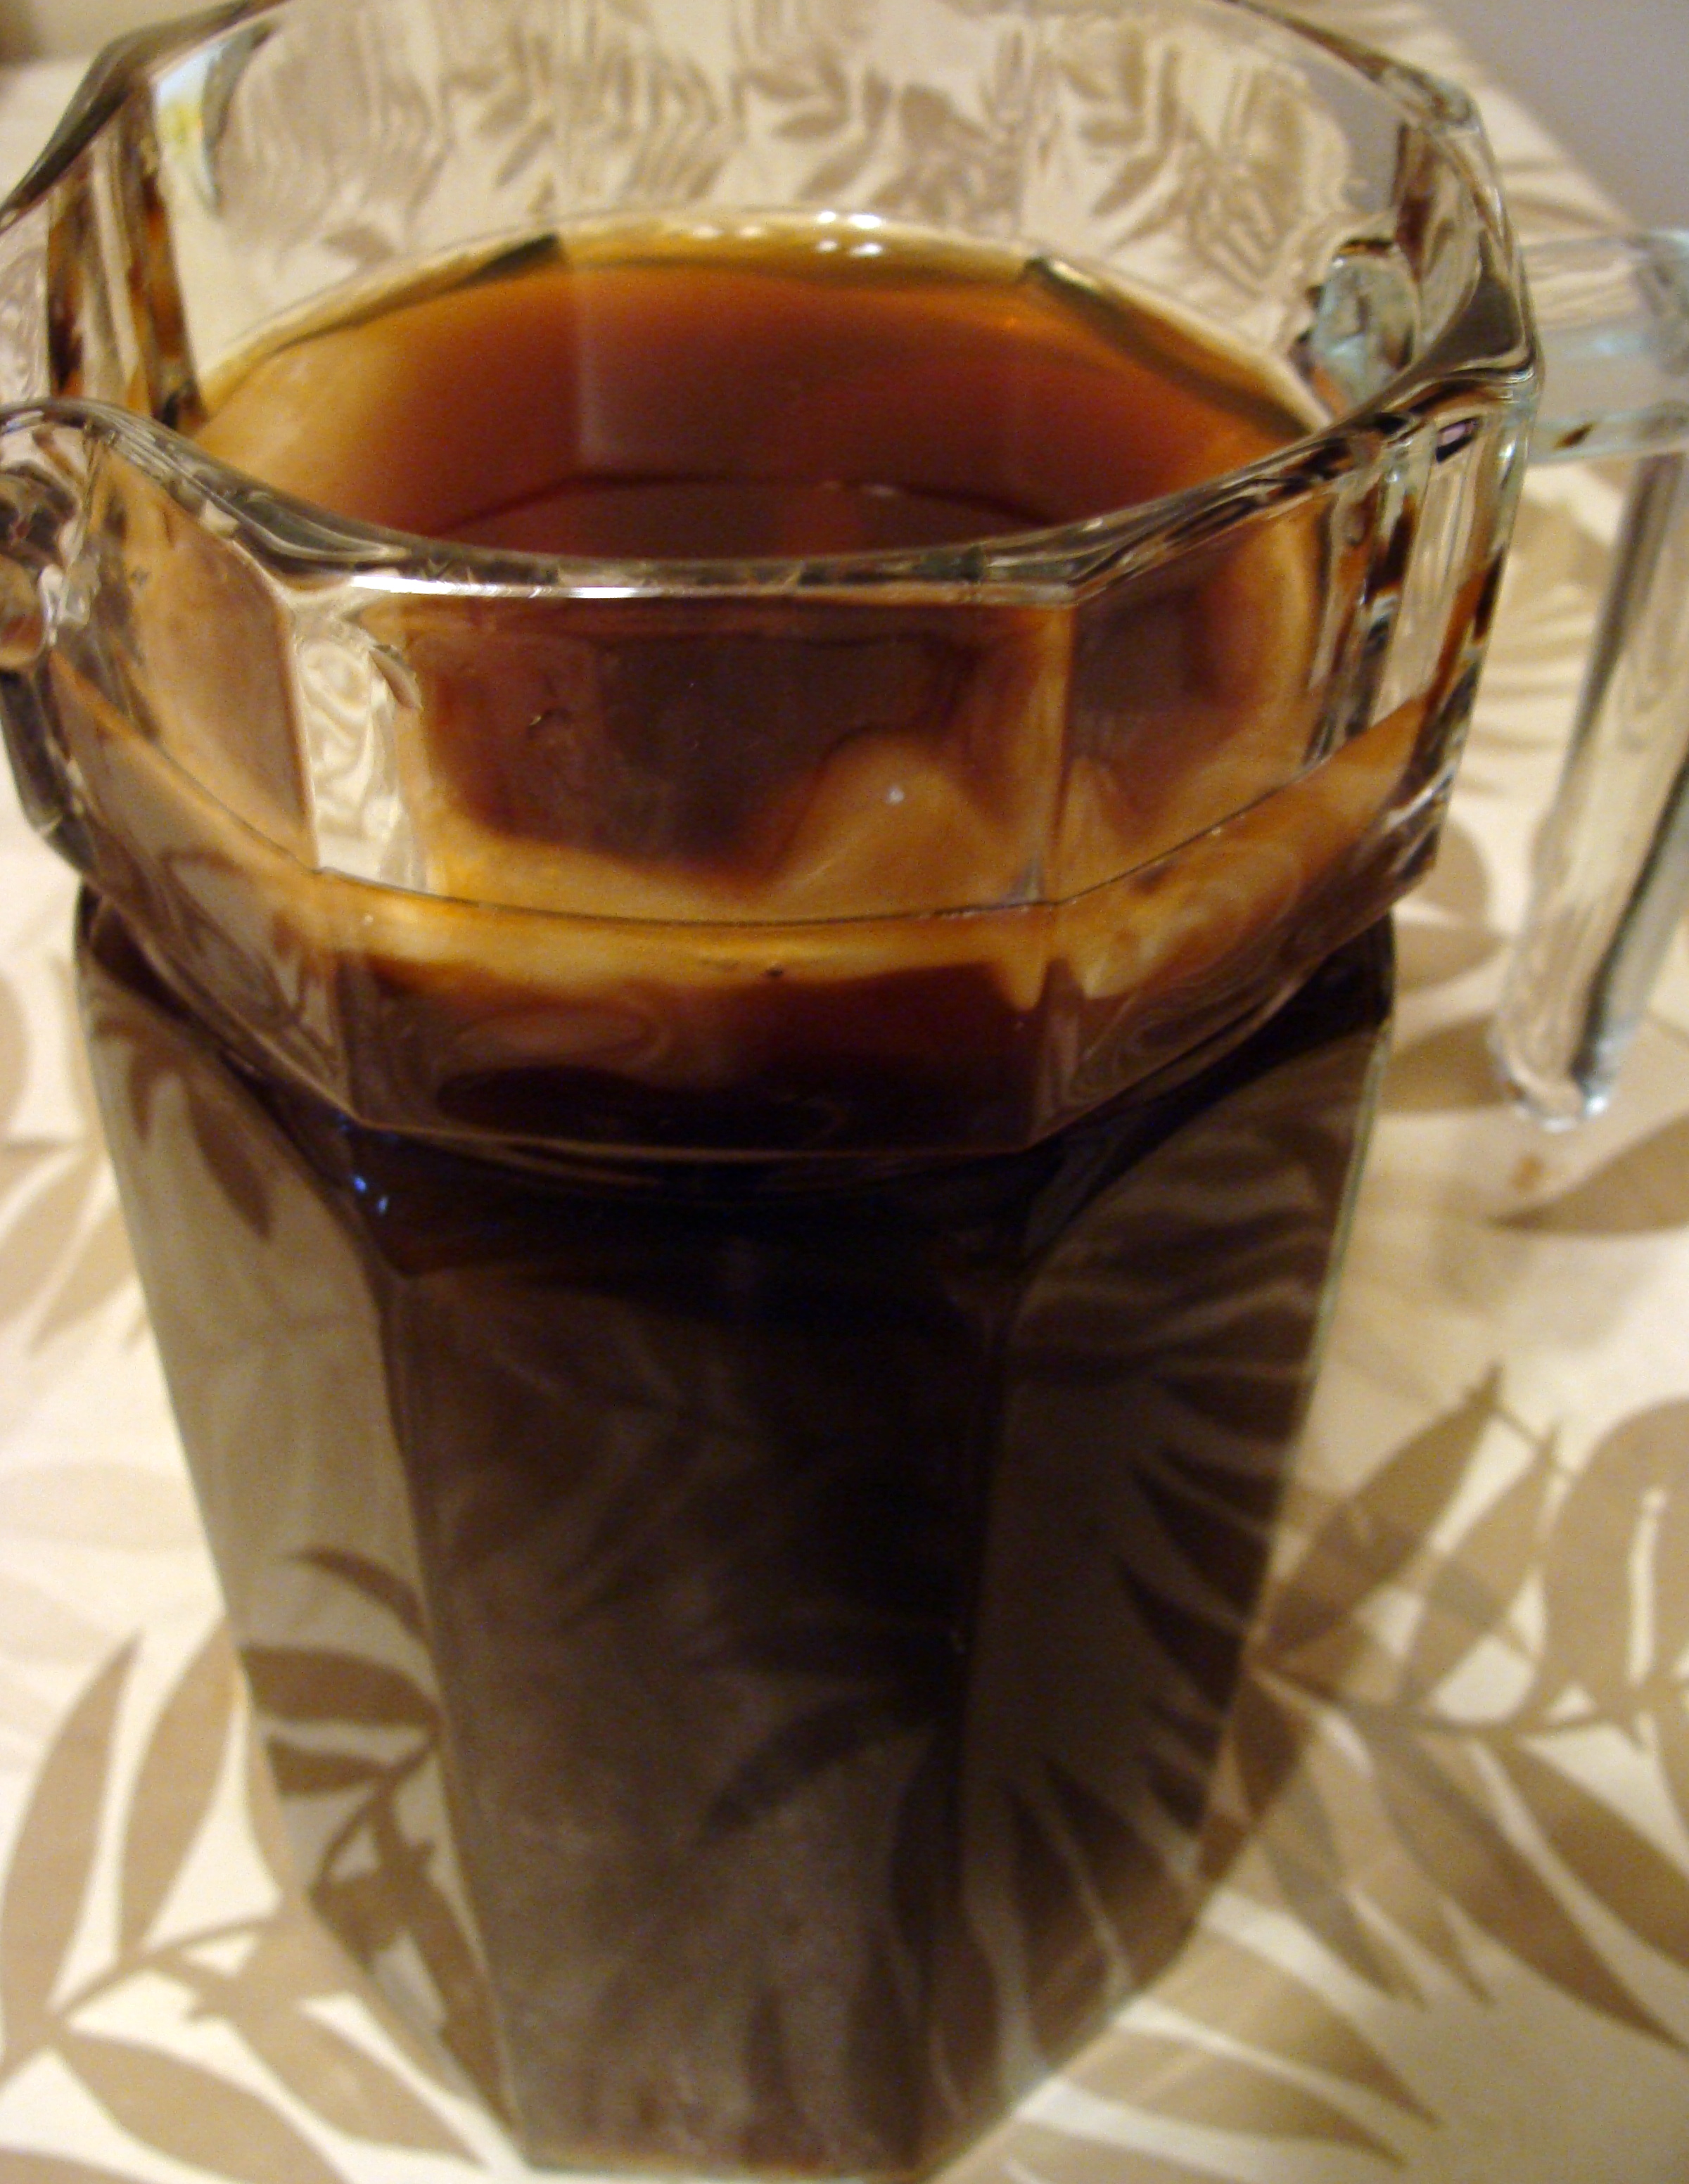 Coffee Kombucha